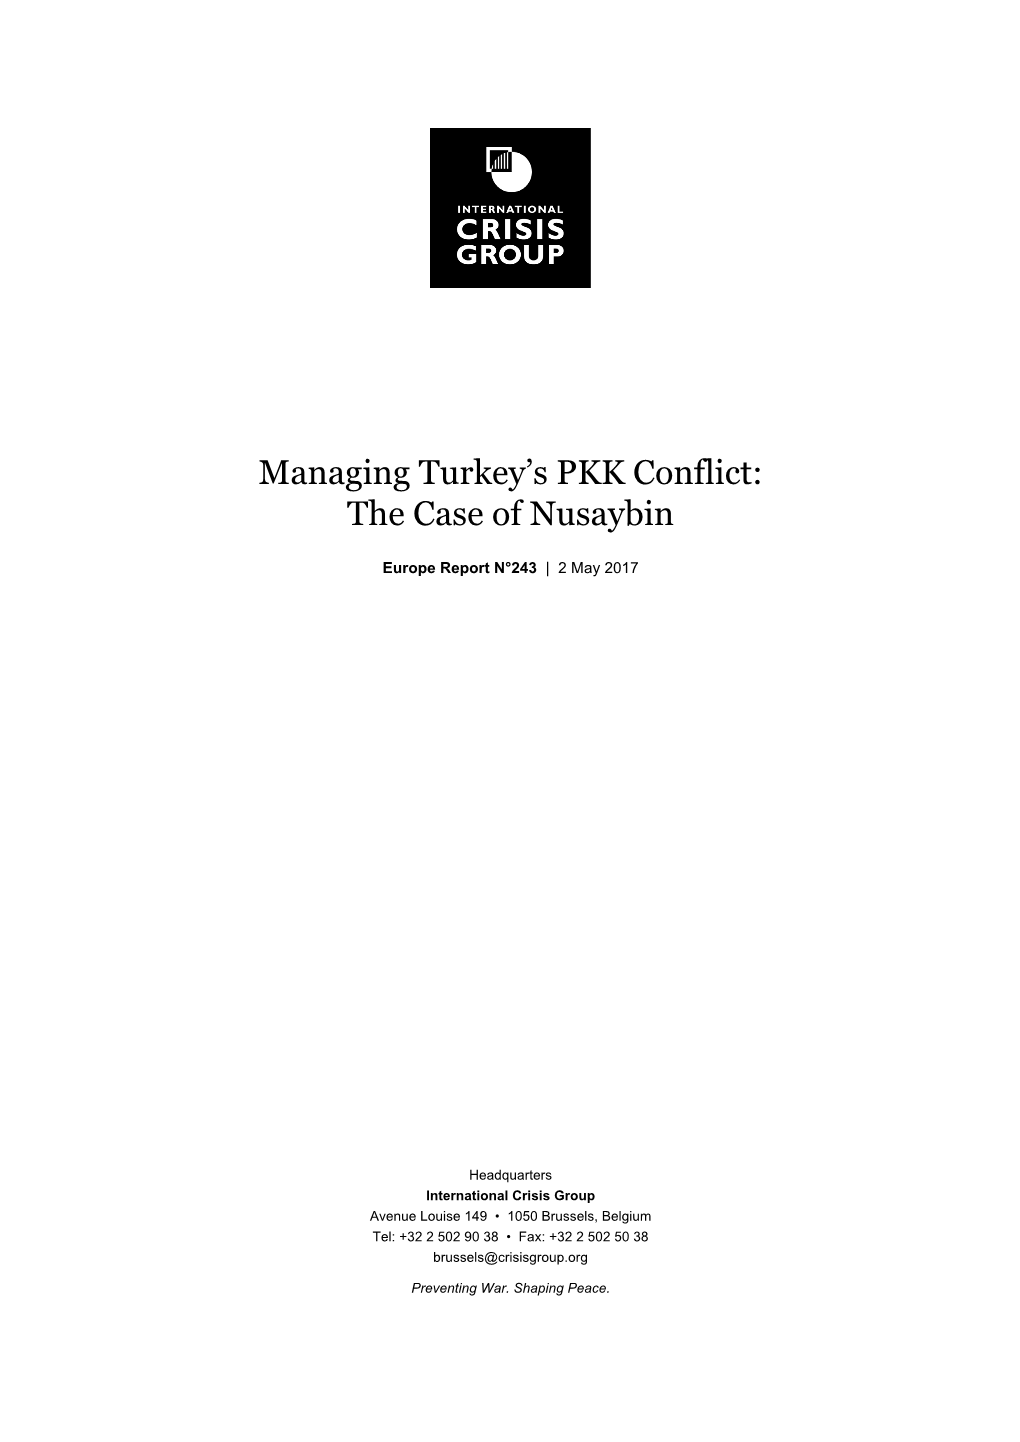 Managing Turkey's PKK Conflict: the Case of Nusaybin